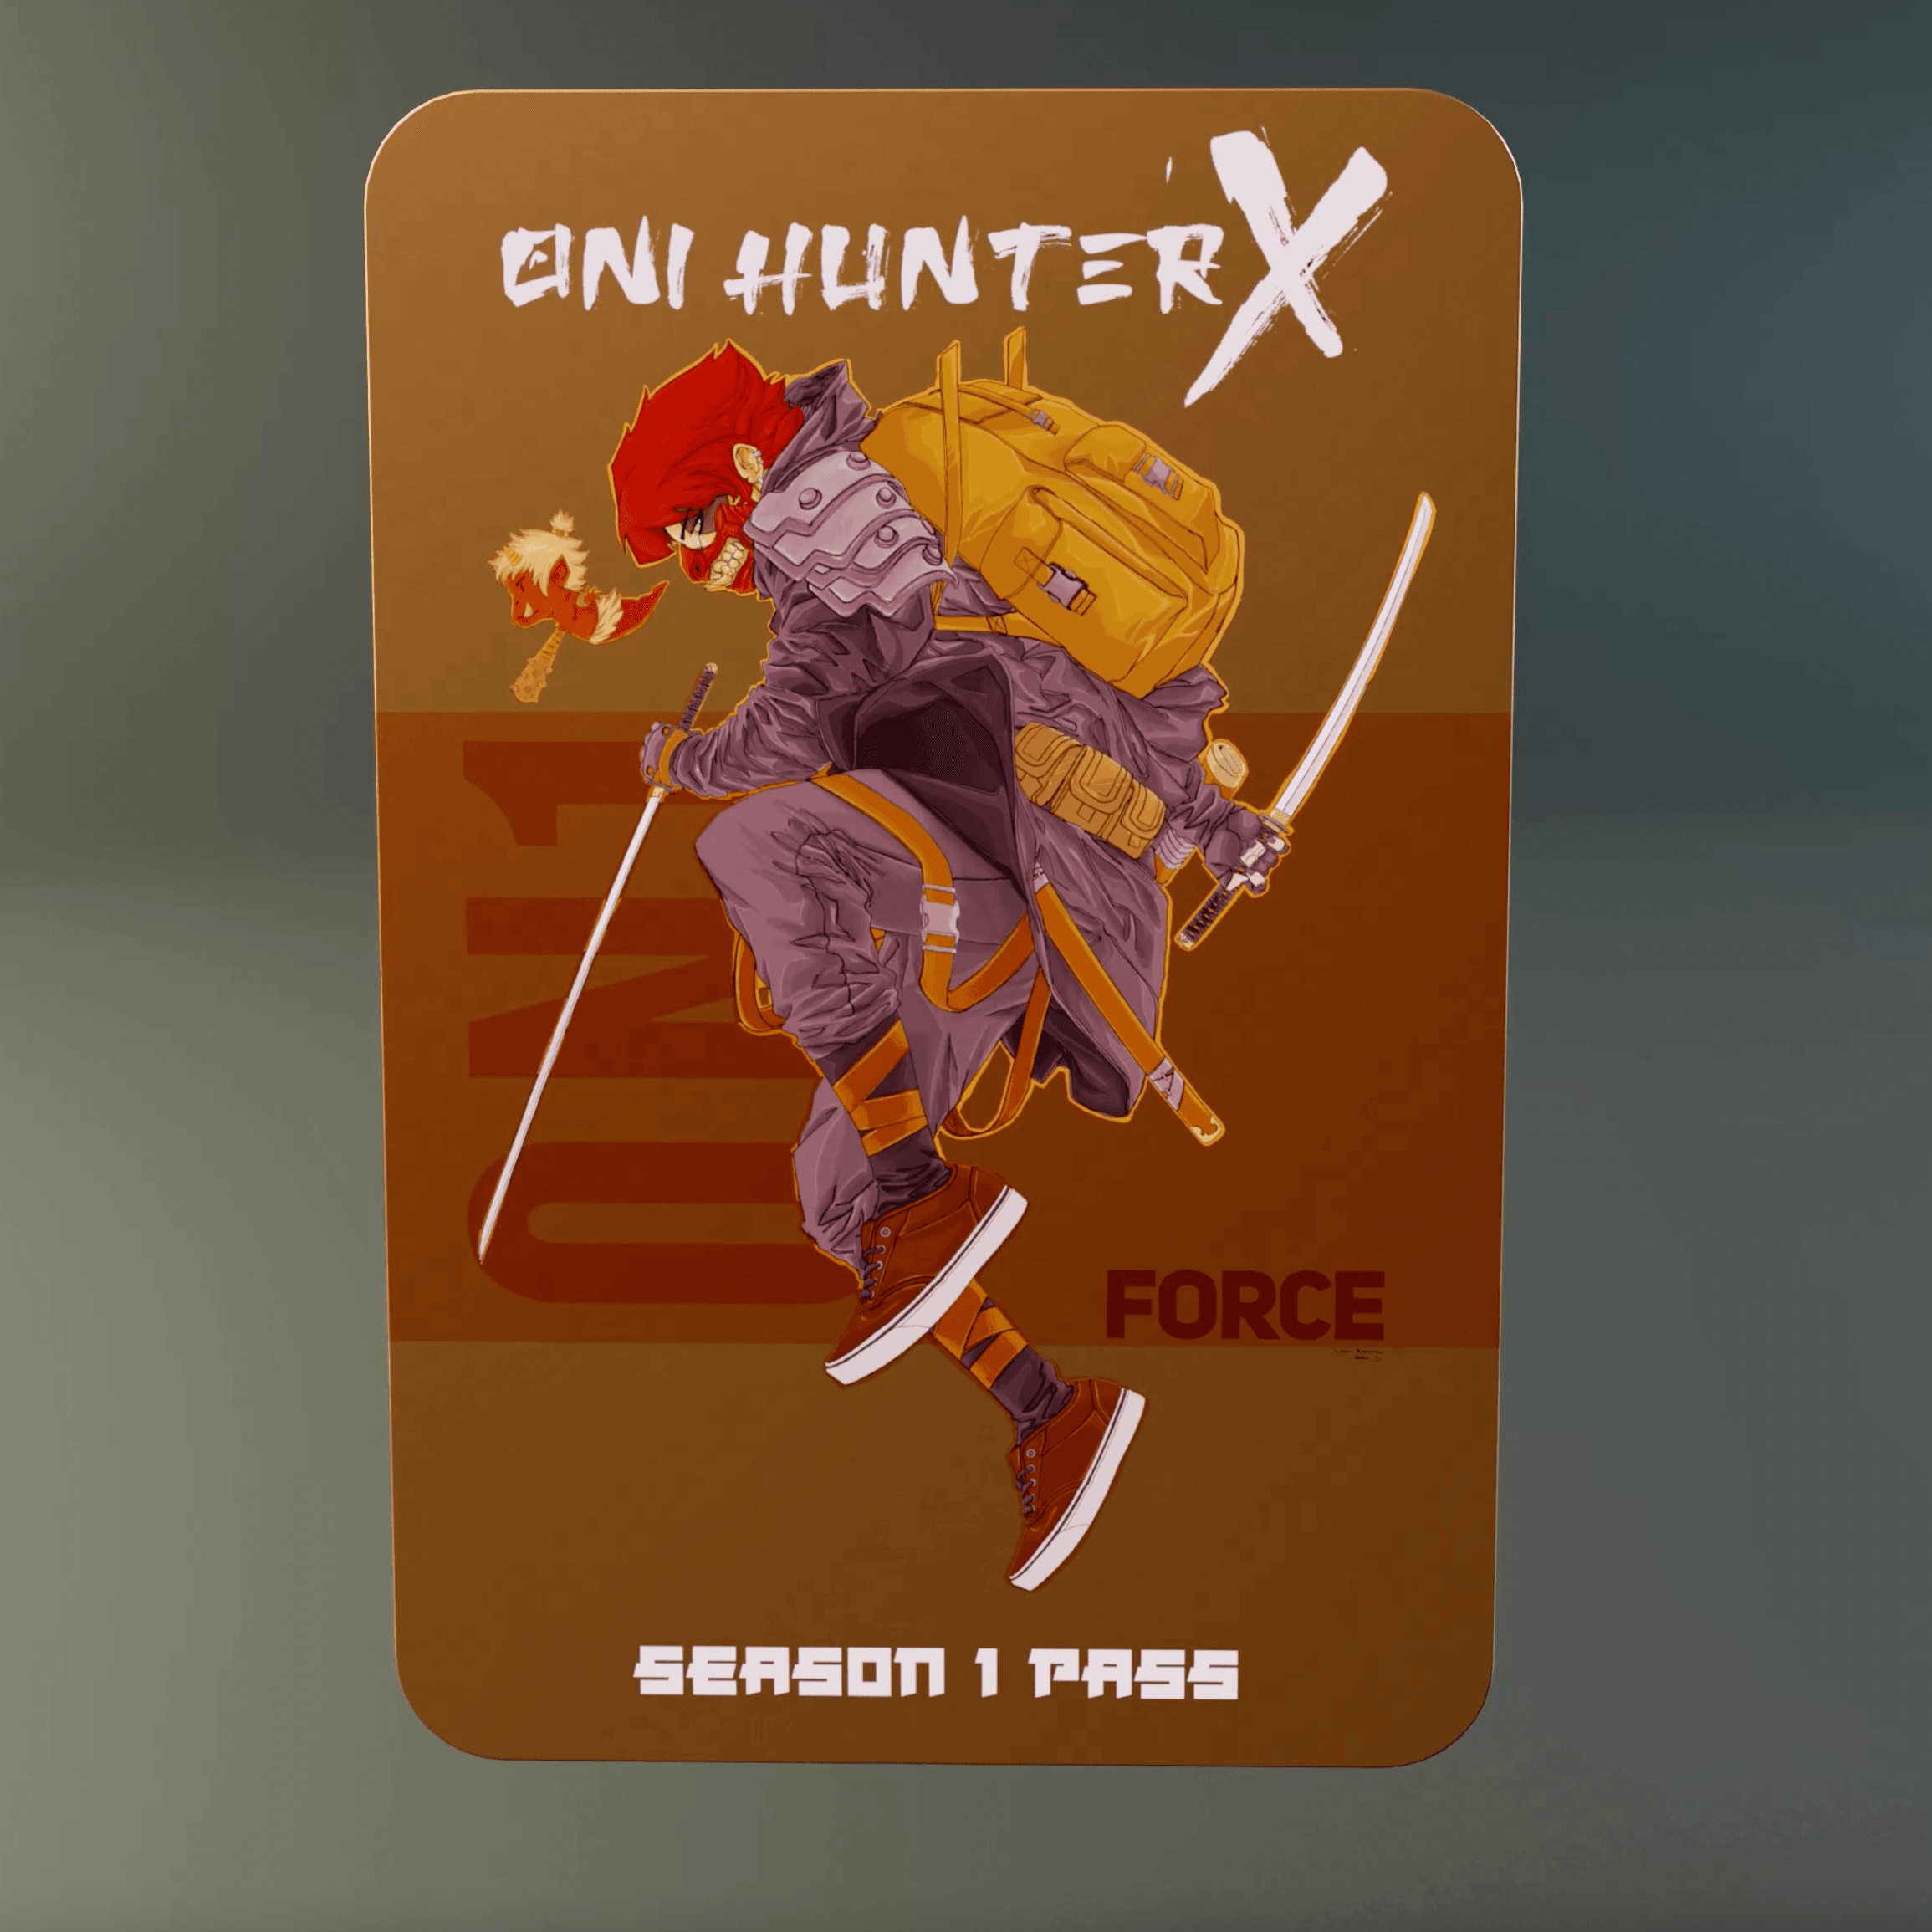 0N1 Hunter X -Season 1 Pass